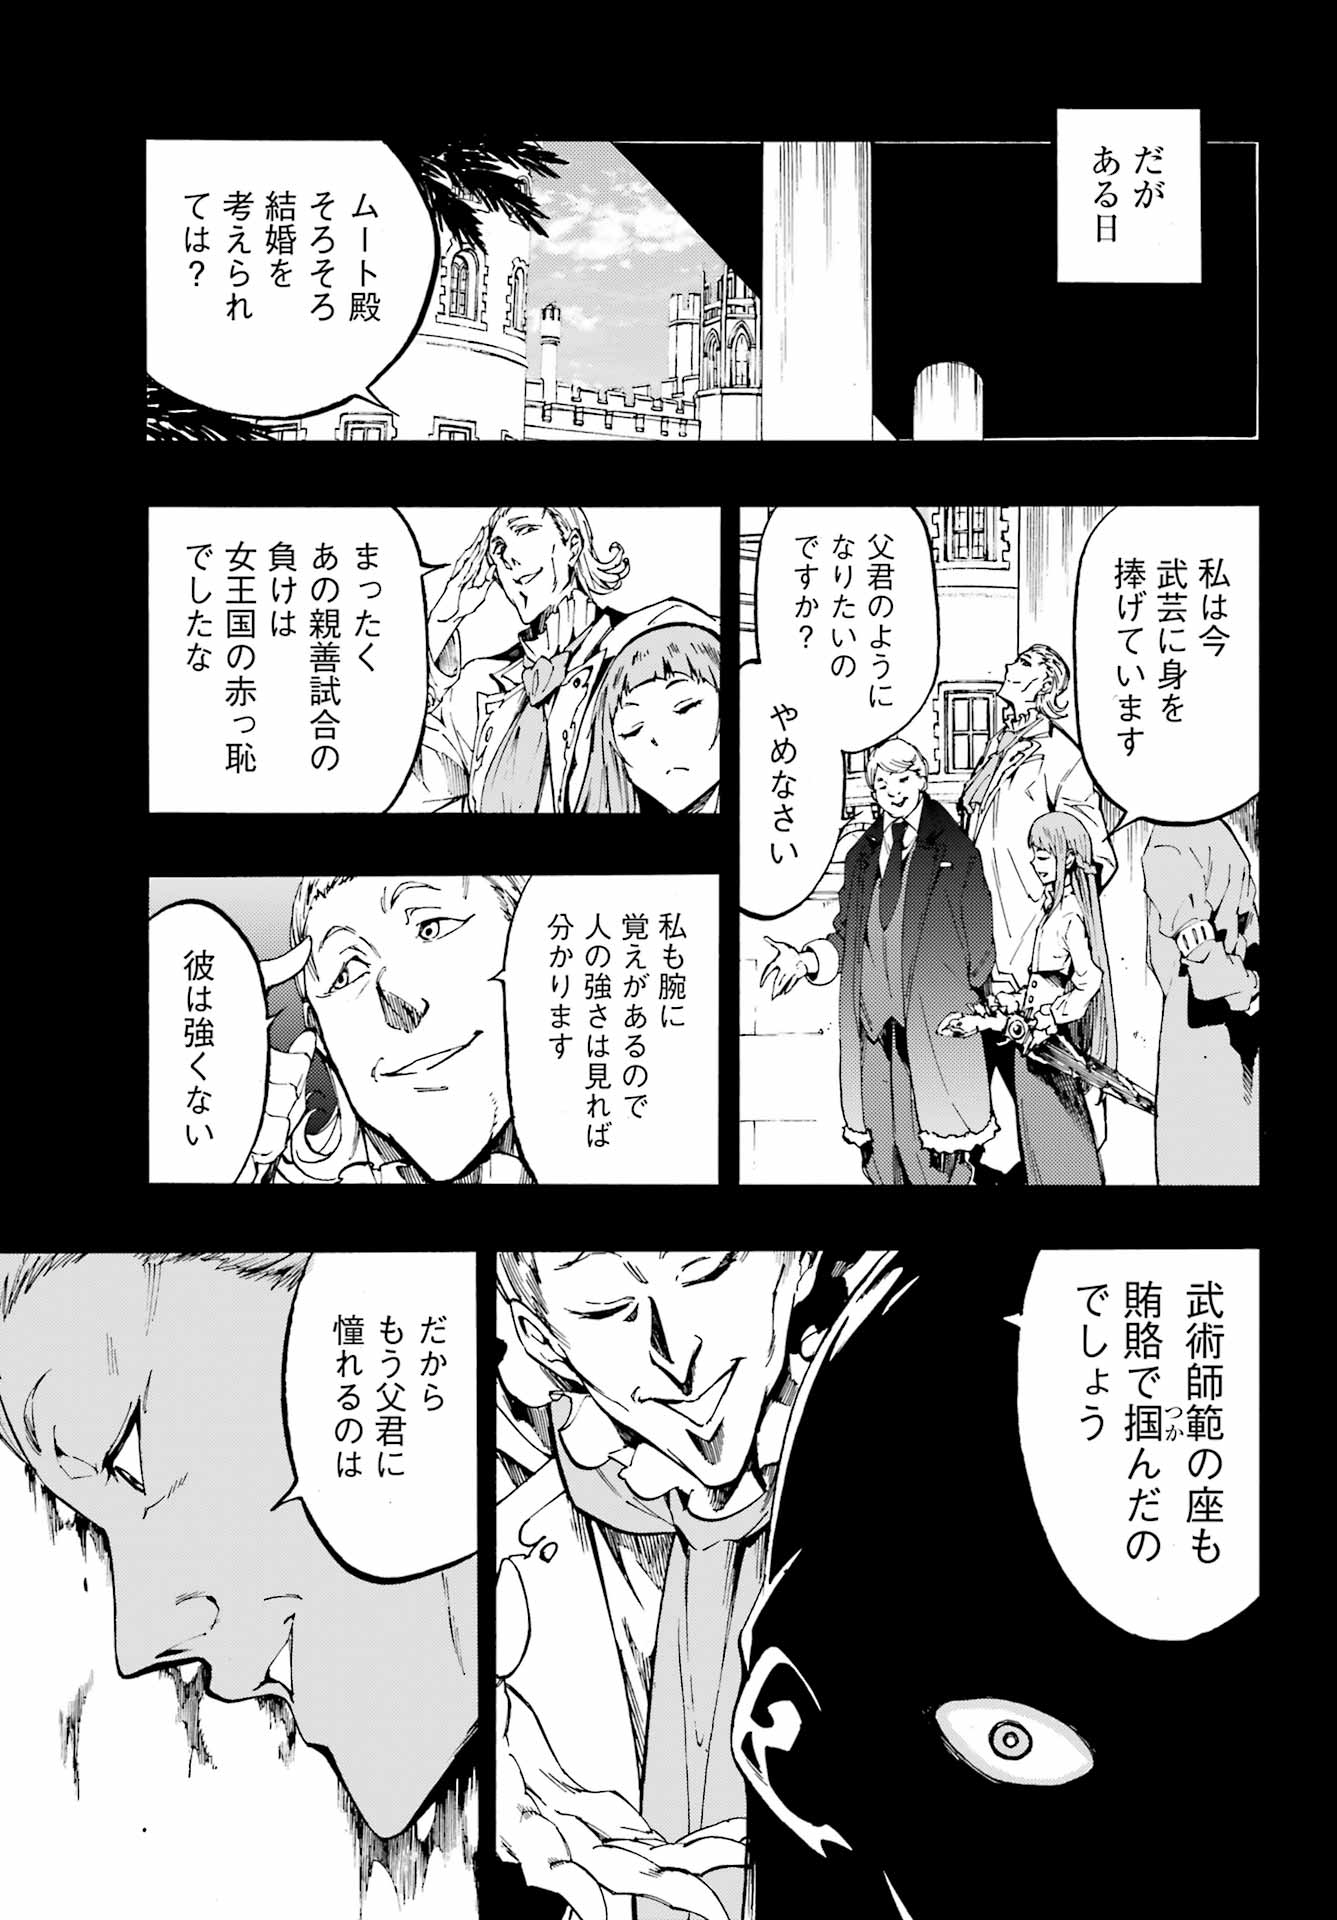 Gokusotsu Kraken - Chapter 19 - Page 9